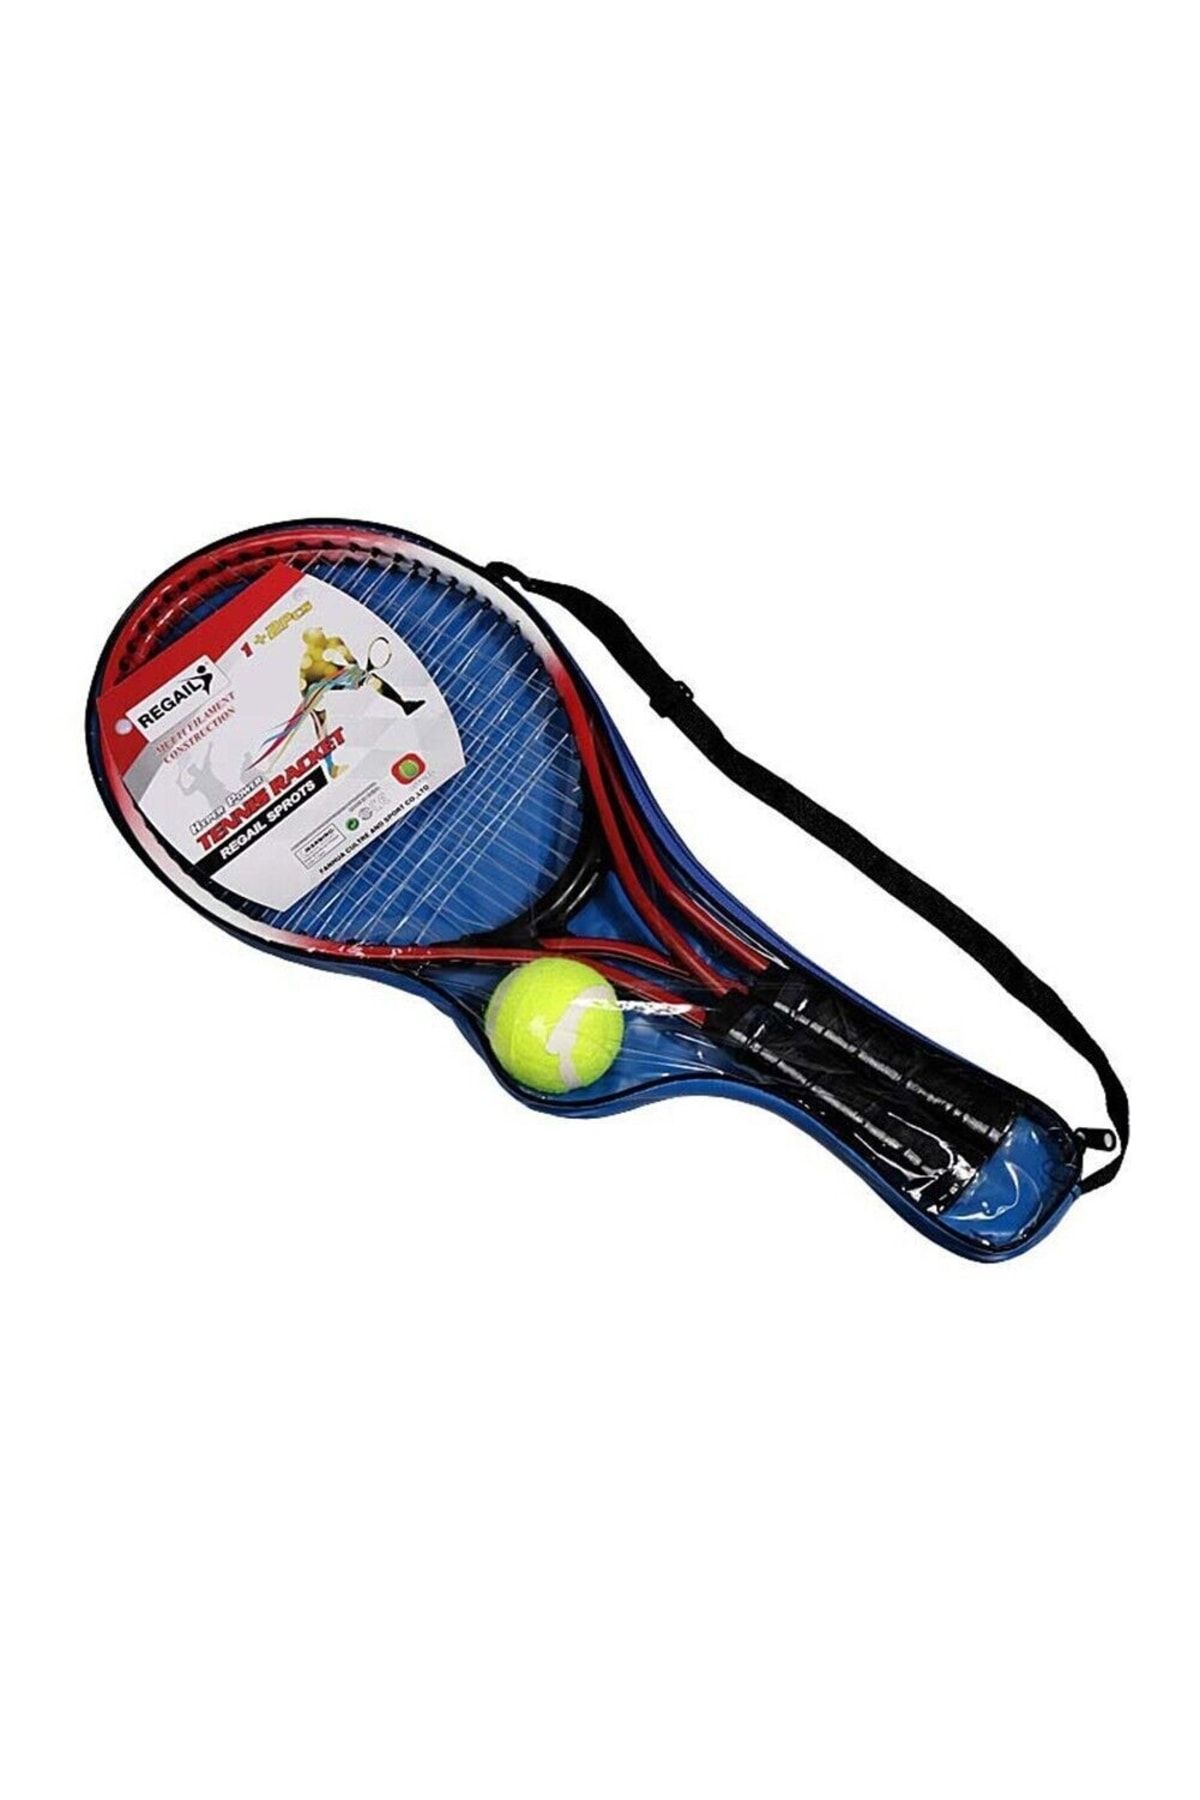 Werkon Kids Tennis Racket Set 21 Inch 2